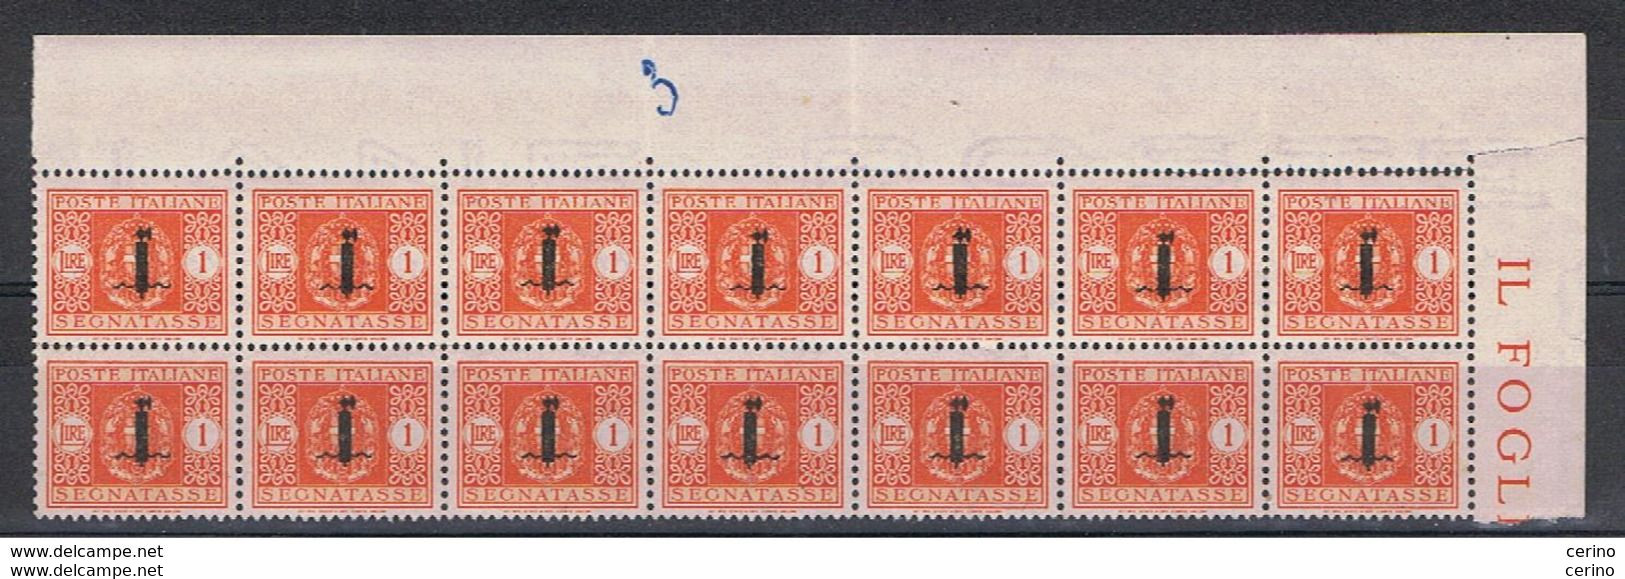 R.S.I.:  1944  TASSE  - £. 1  ARANCIO  BL. 14  N. -  DENTELLATURA  APERTA  IN  ALTO  A  DX. -   SASS. 68 - Strafport